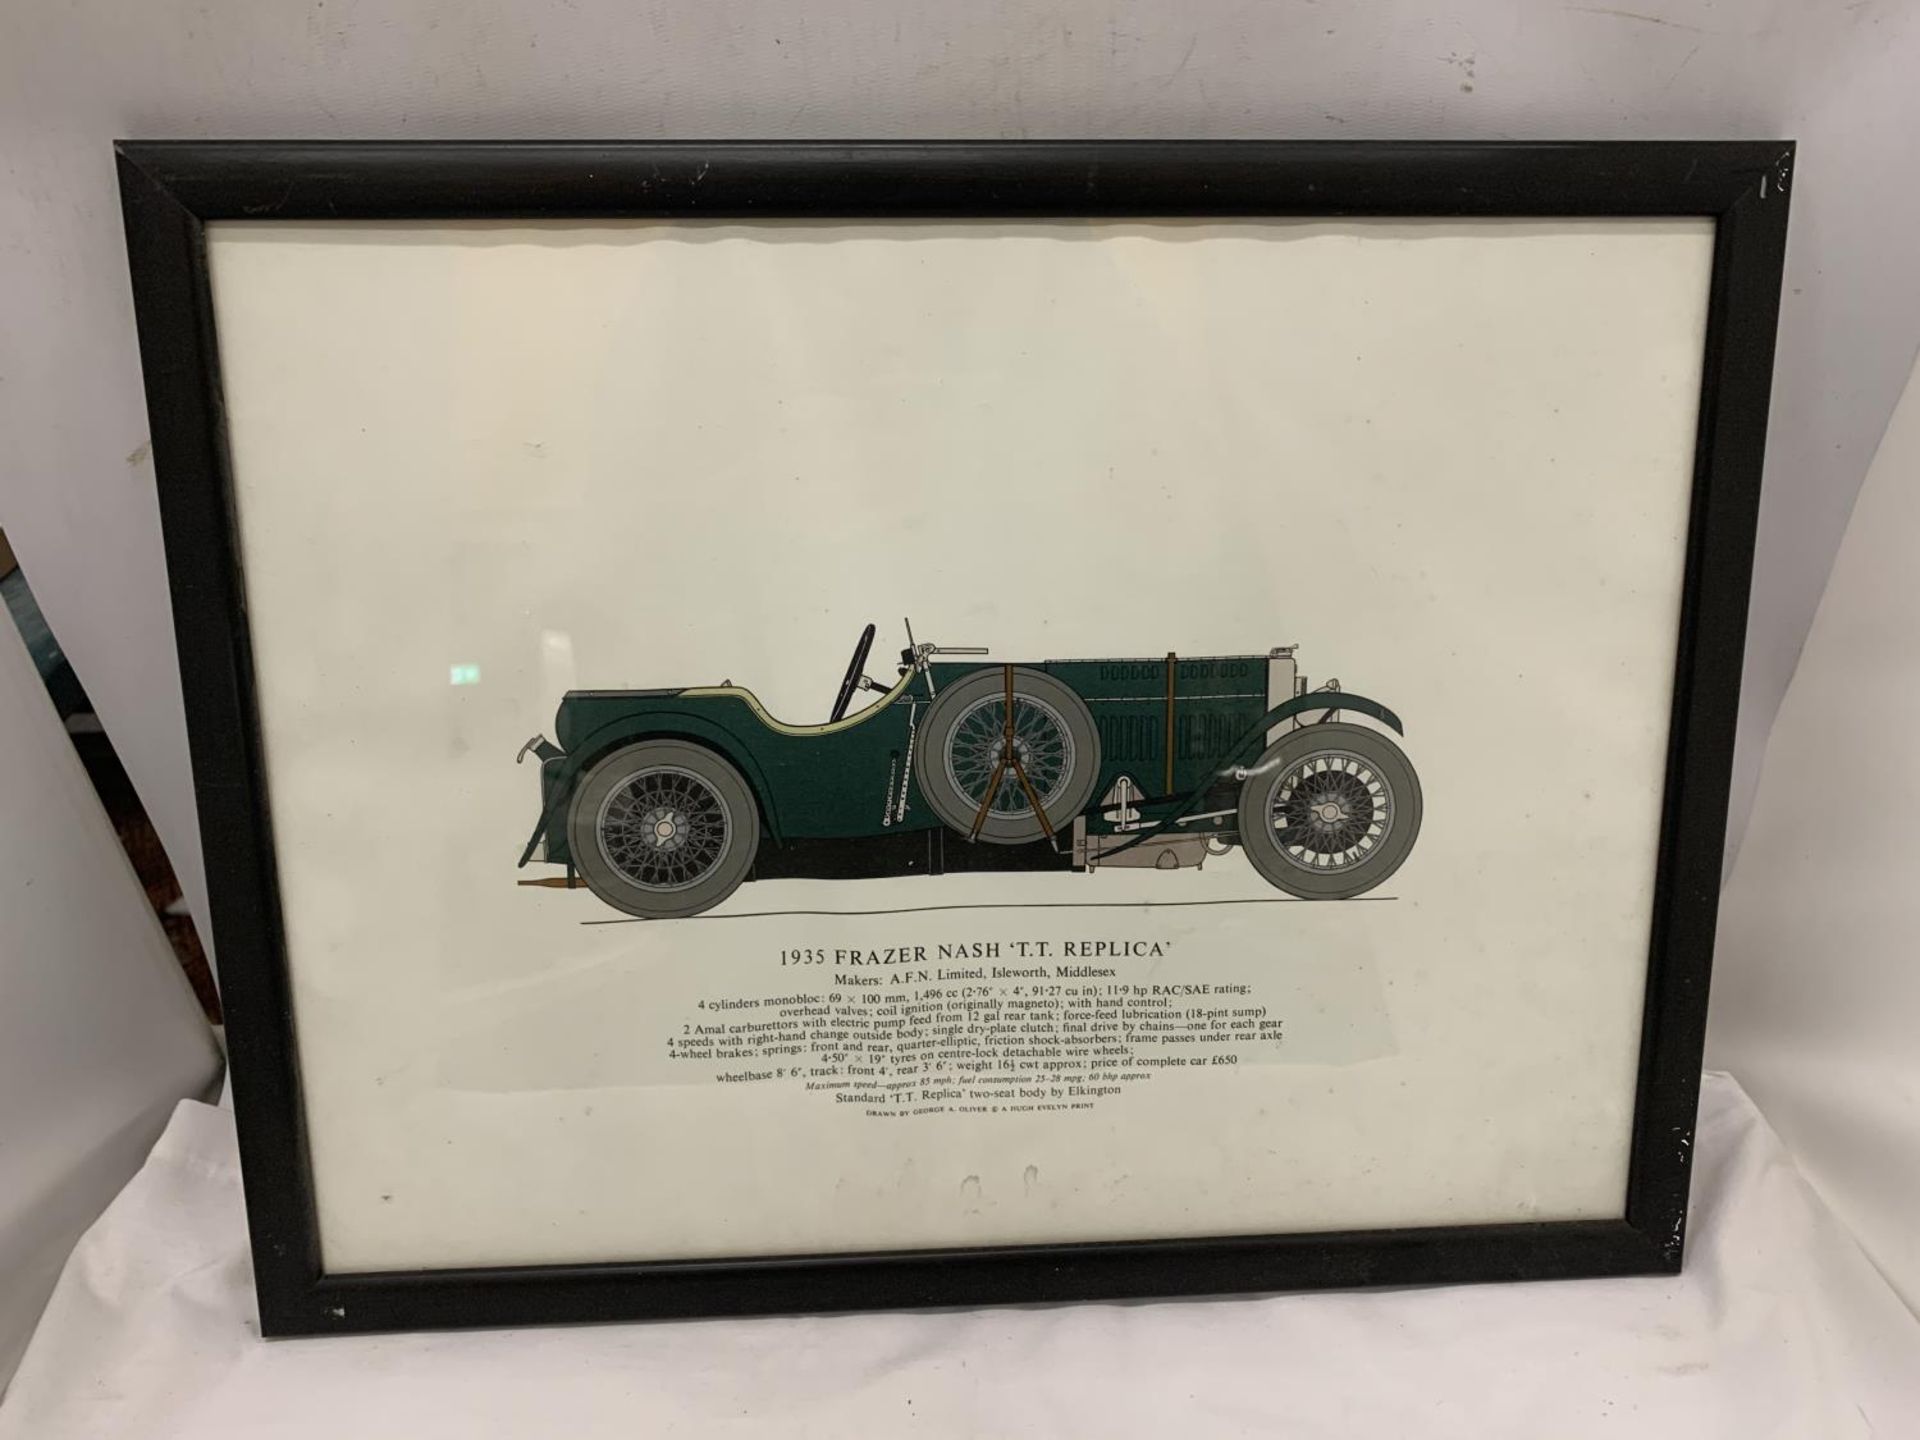 SIX FRAMED PRINTS OF VINTAGE CARS TO INCLUDE A 1930 AUSTIN 7 'ULSTER', 1926 SUNBEAM 3 LITRE, ETC - Bild 7 aus 7